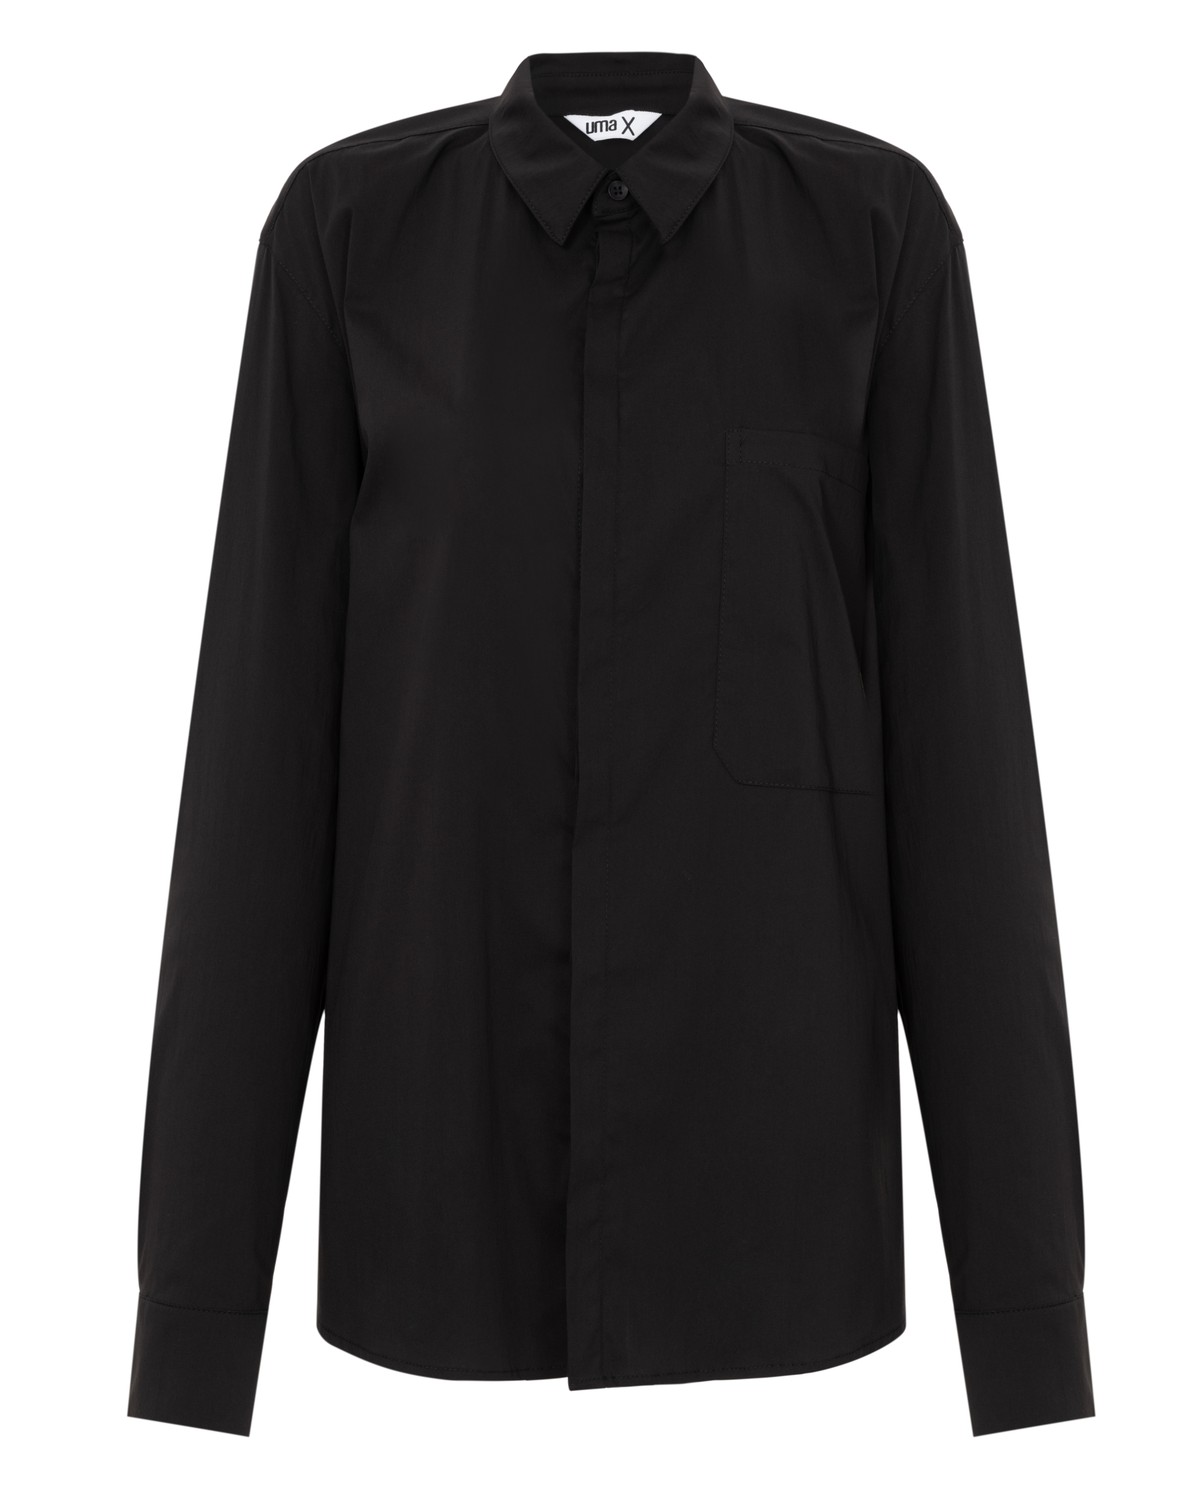 camisa manga longa preta | long sleeve black shirt